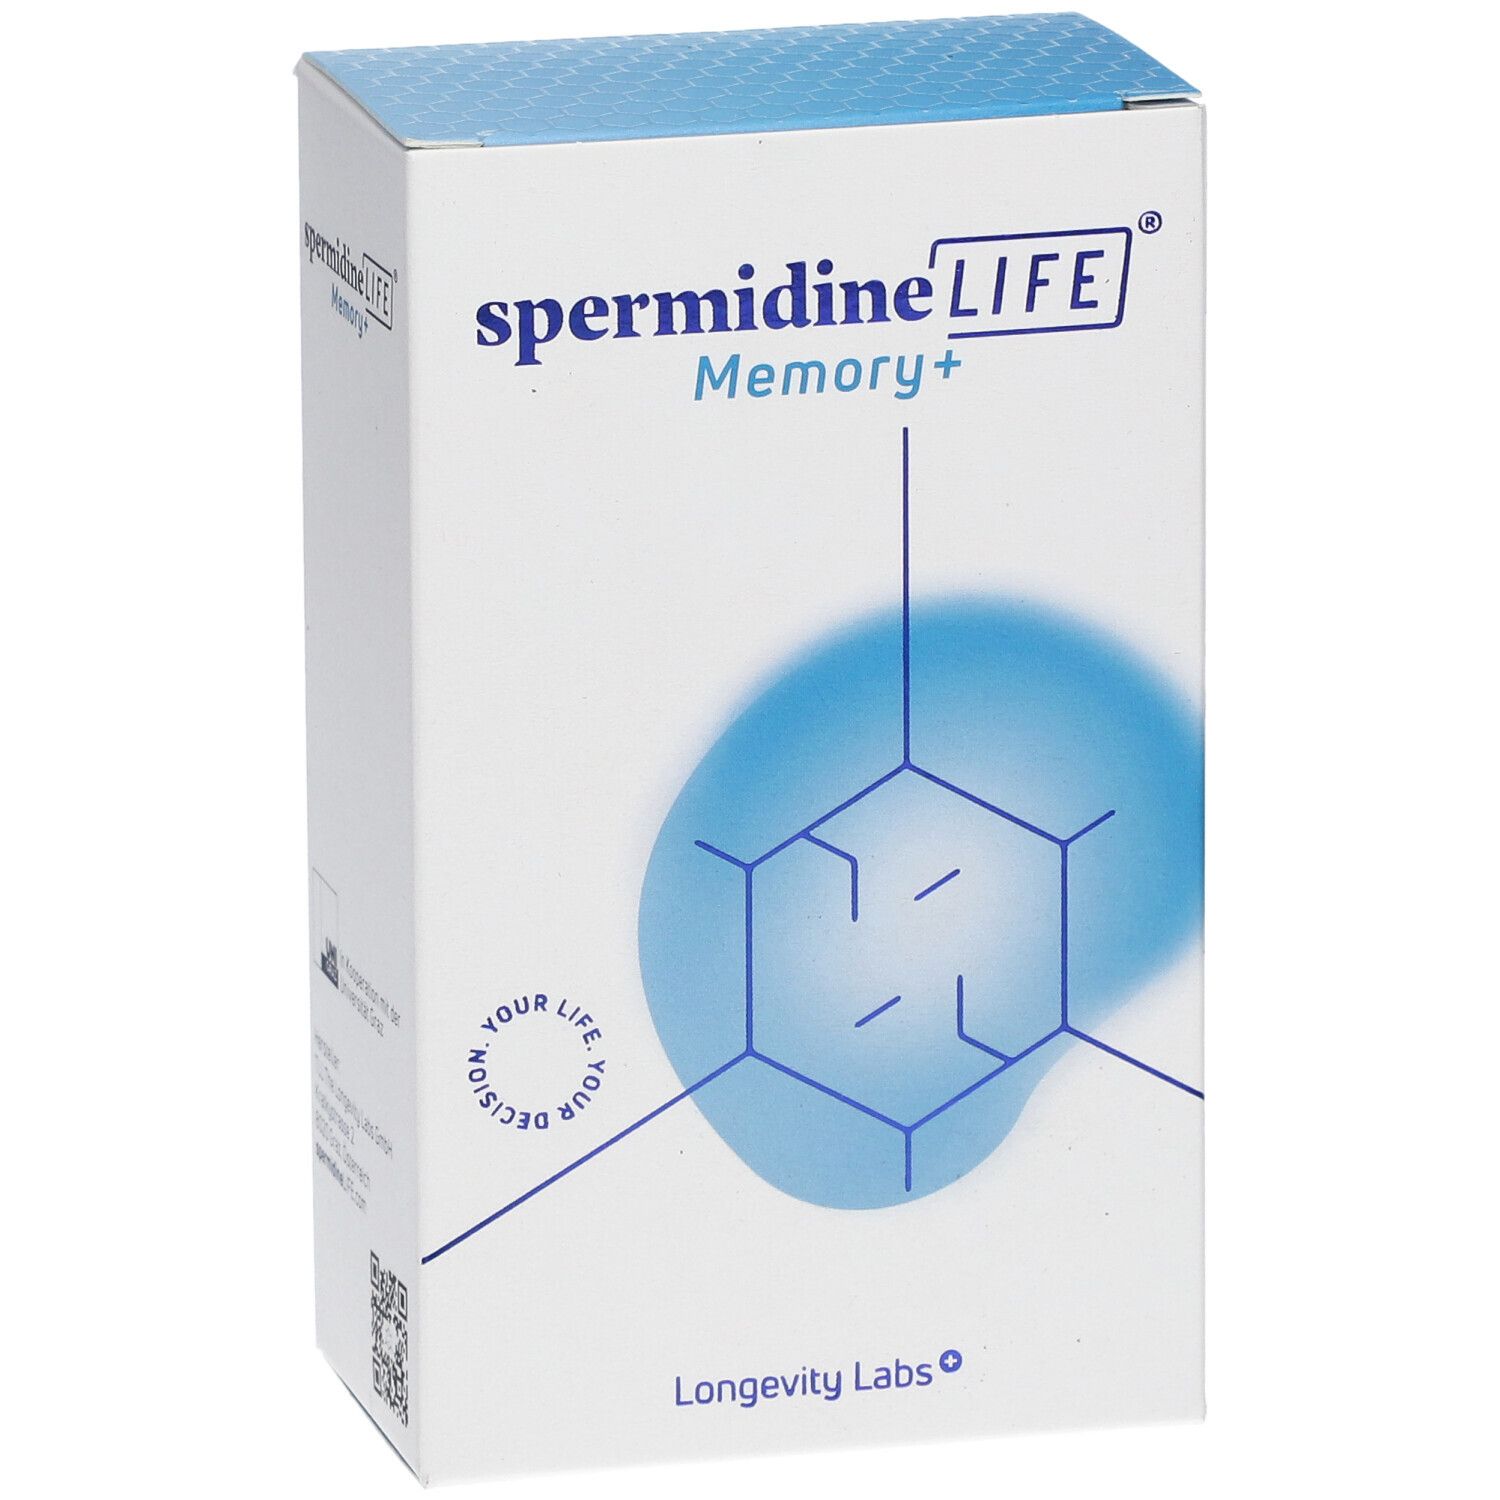 spermidineLIFE® Memory+